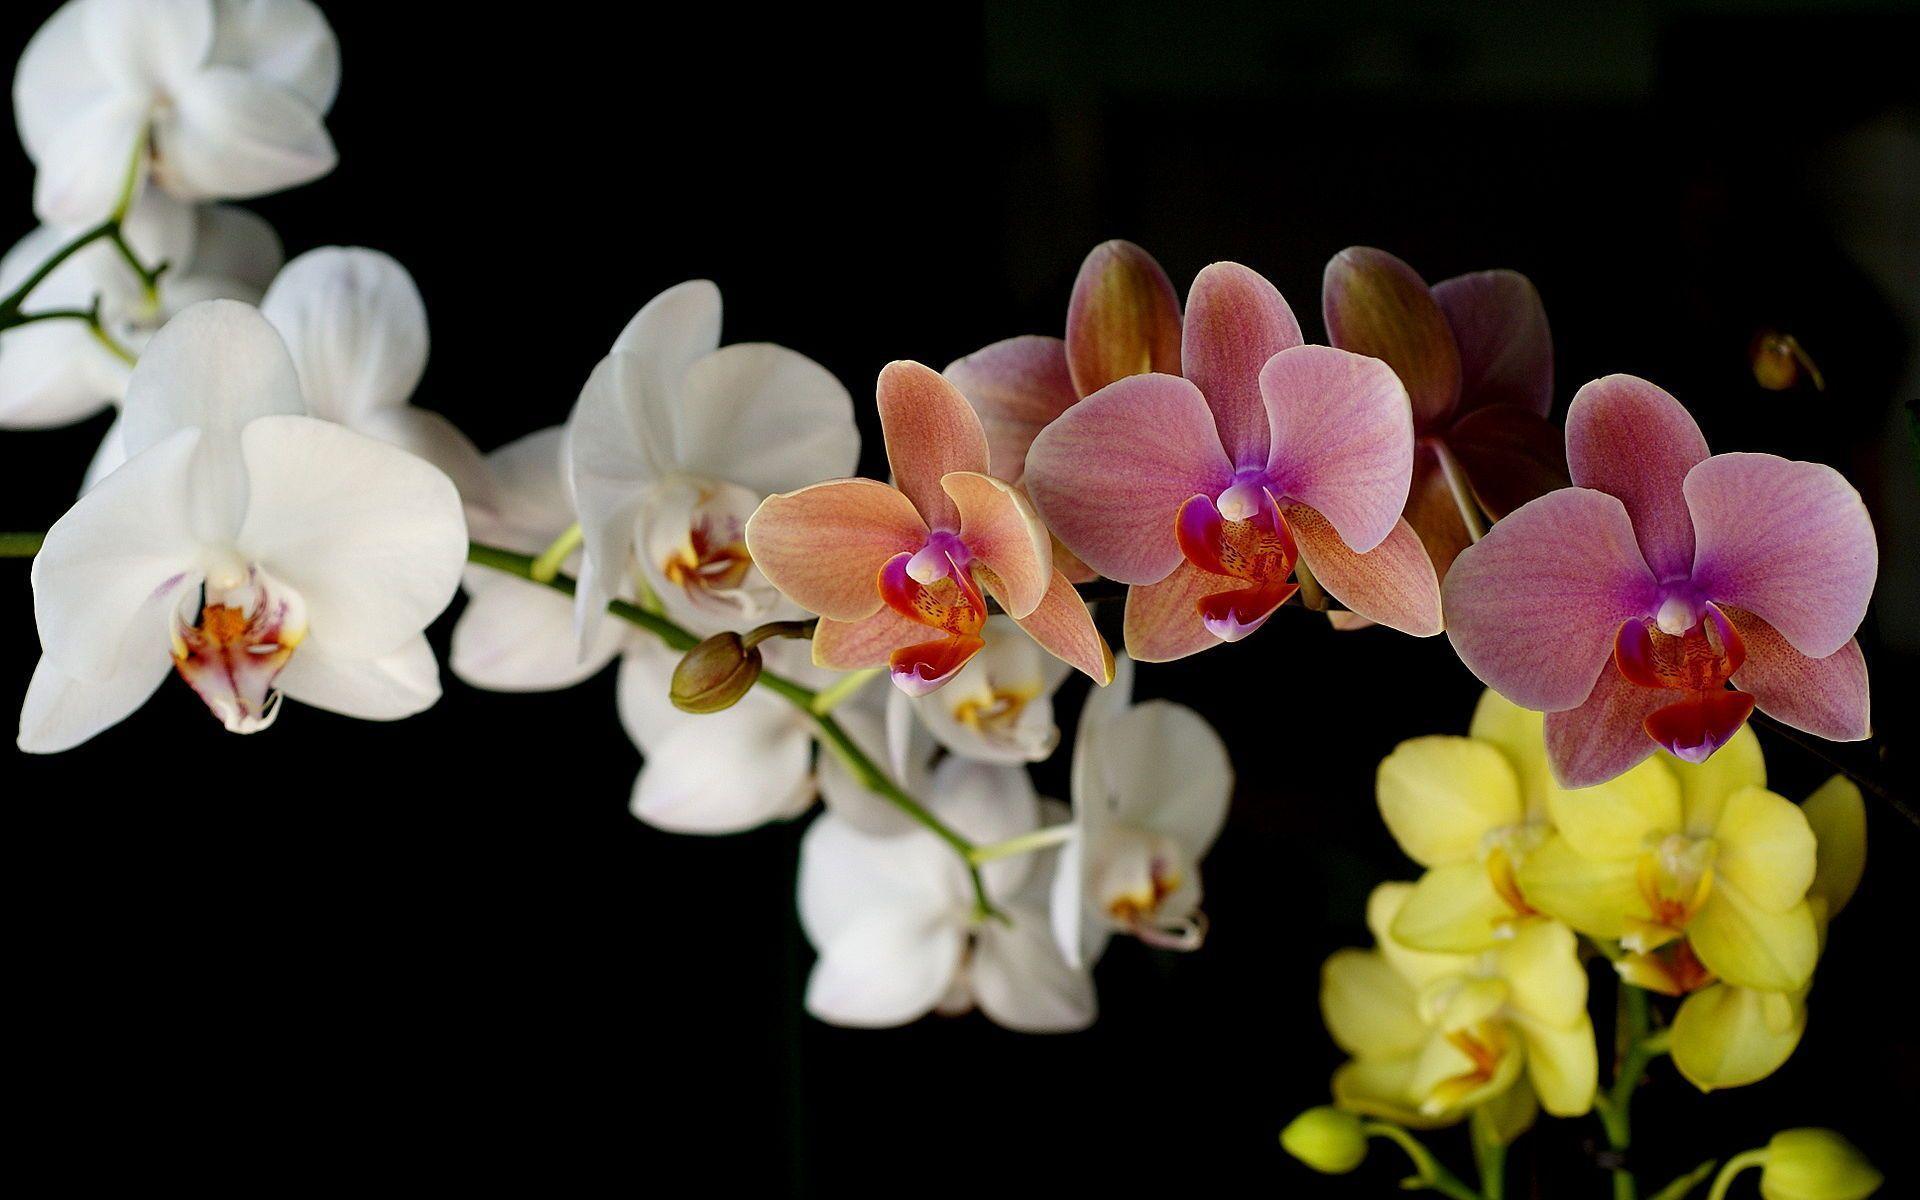 Orchid flower, Orchids photo wallpaper for your desktop